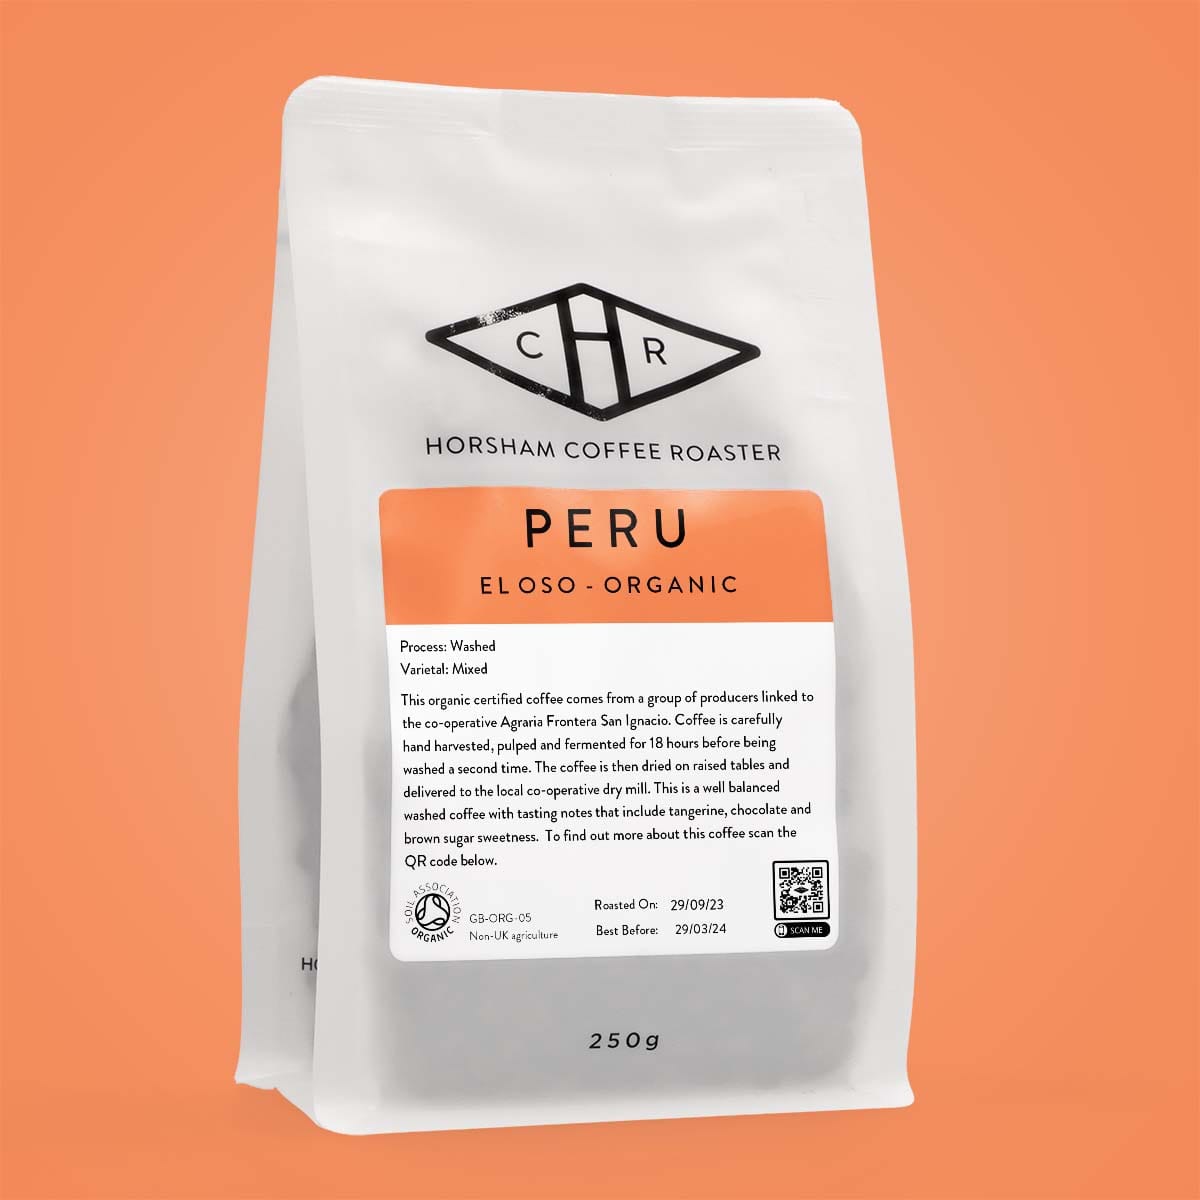 Peru El Oso organic coffee